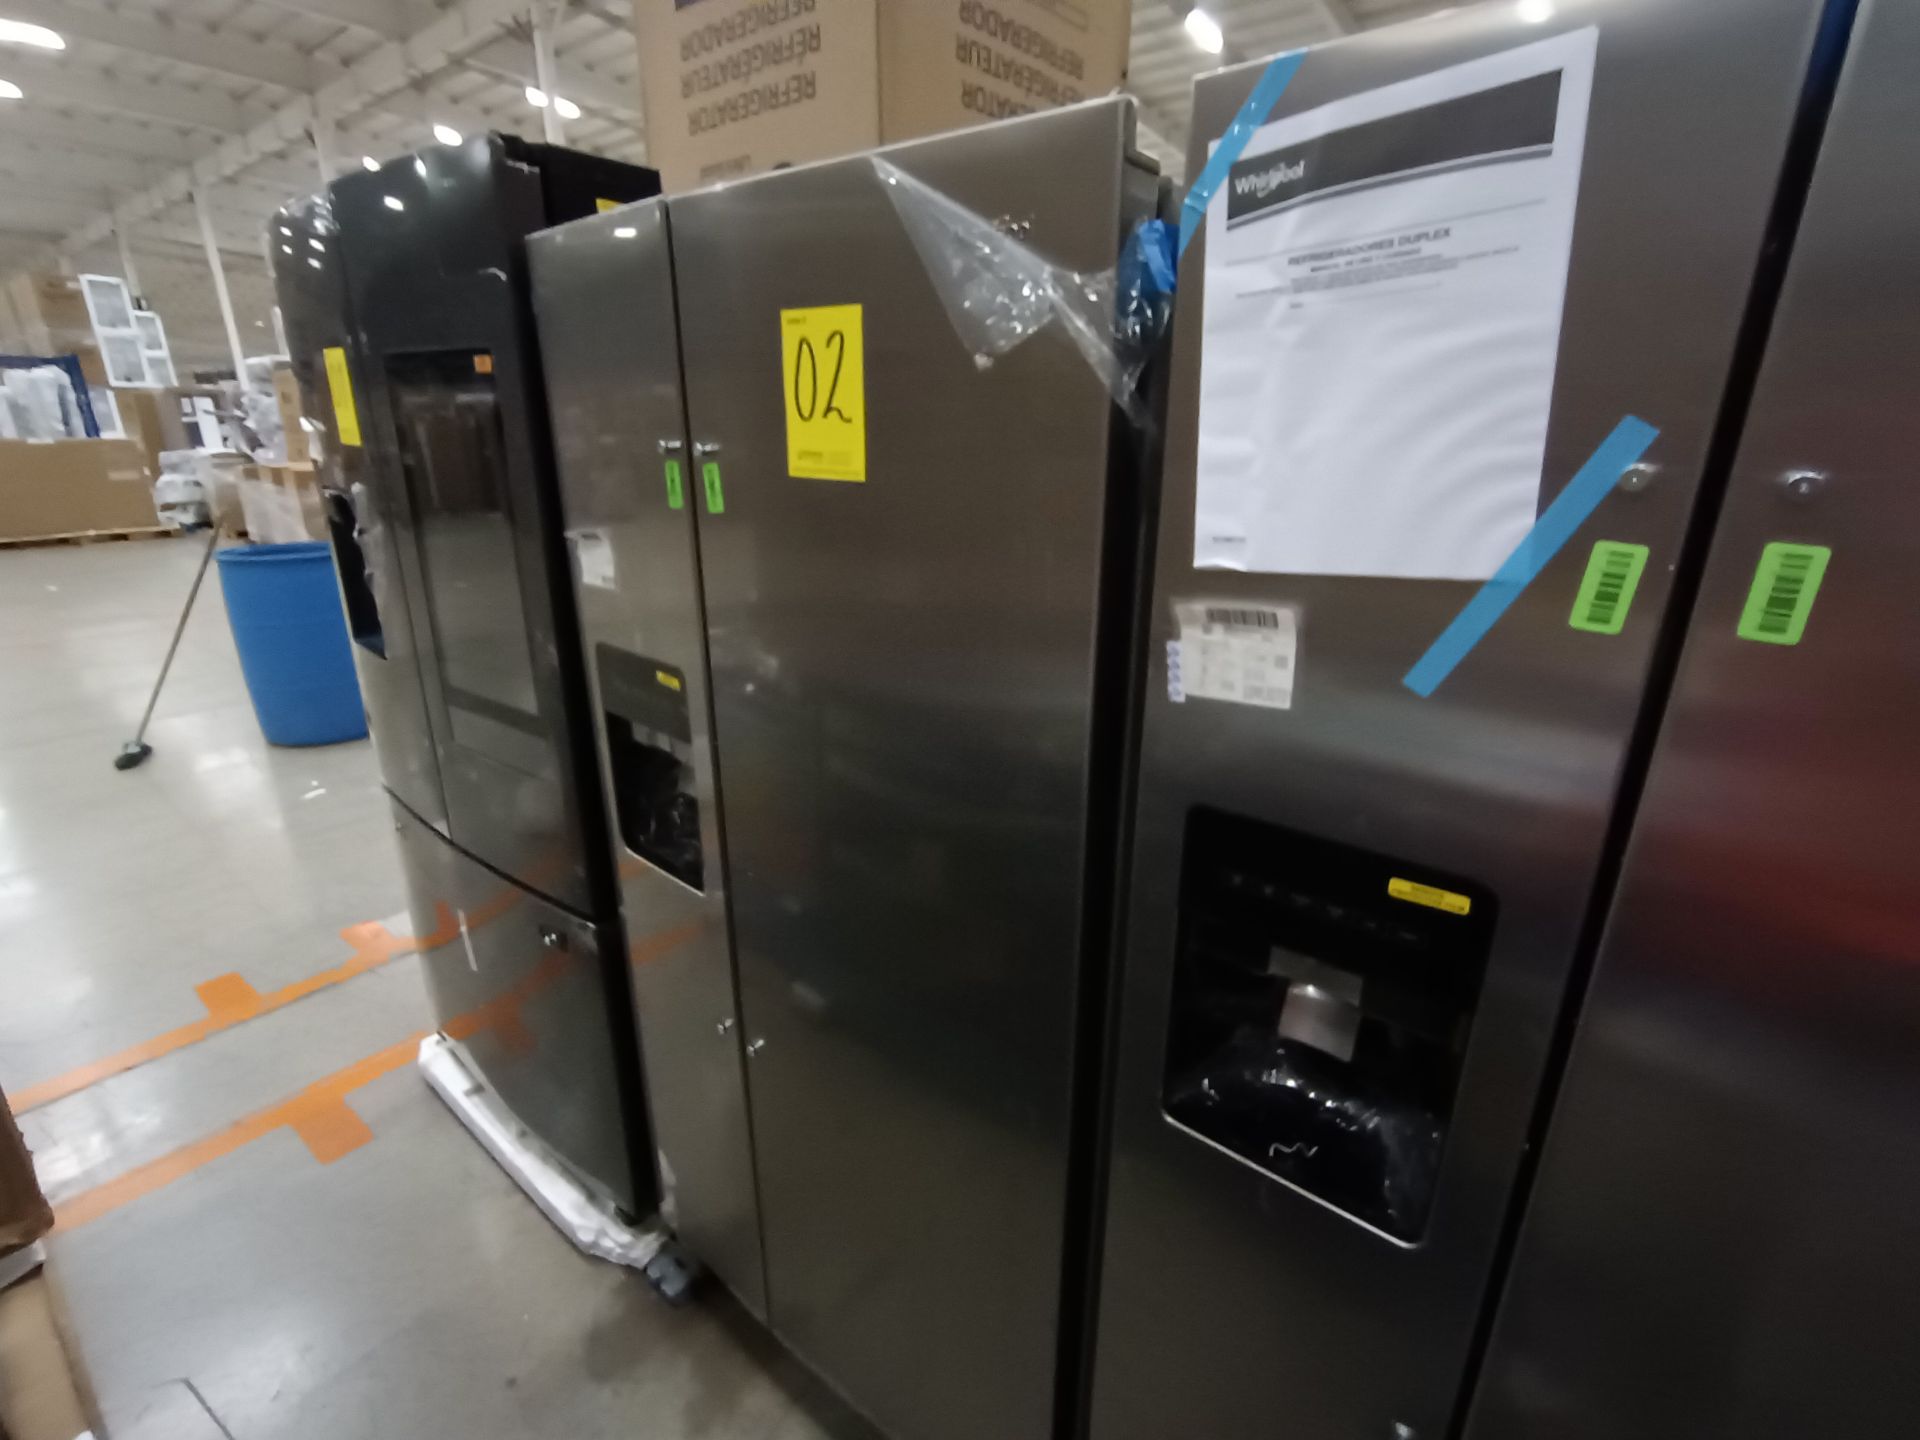 1 Refrigerador con dispensador de agua Marca WIHIRLPOOL, Modelo WD2620S, No de serie HRB3558320, Co - Image 2 of 7